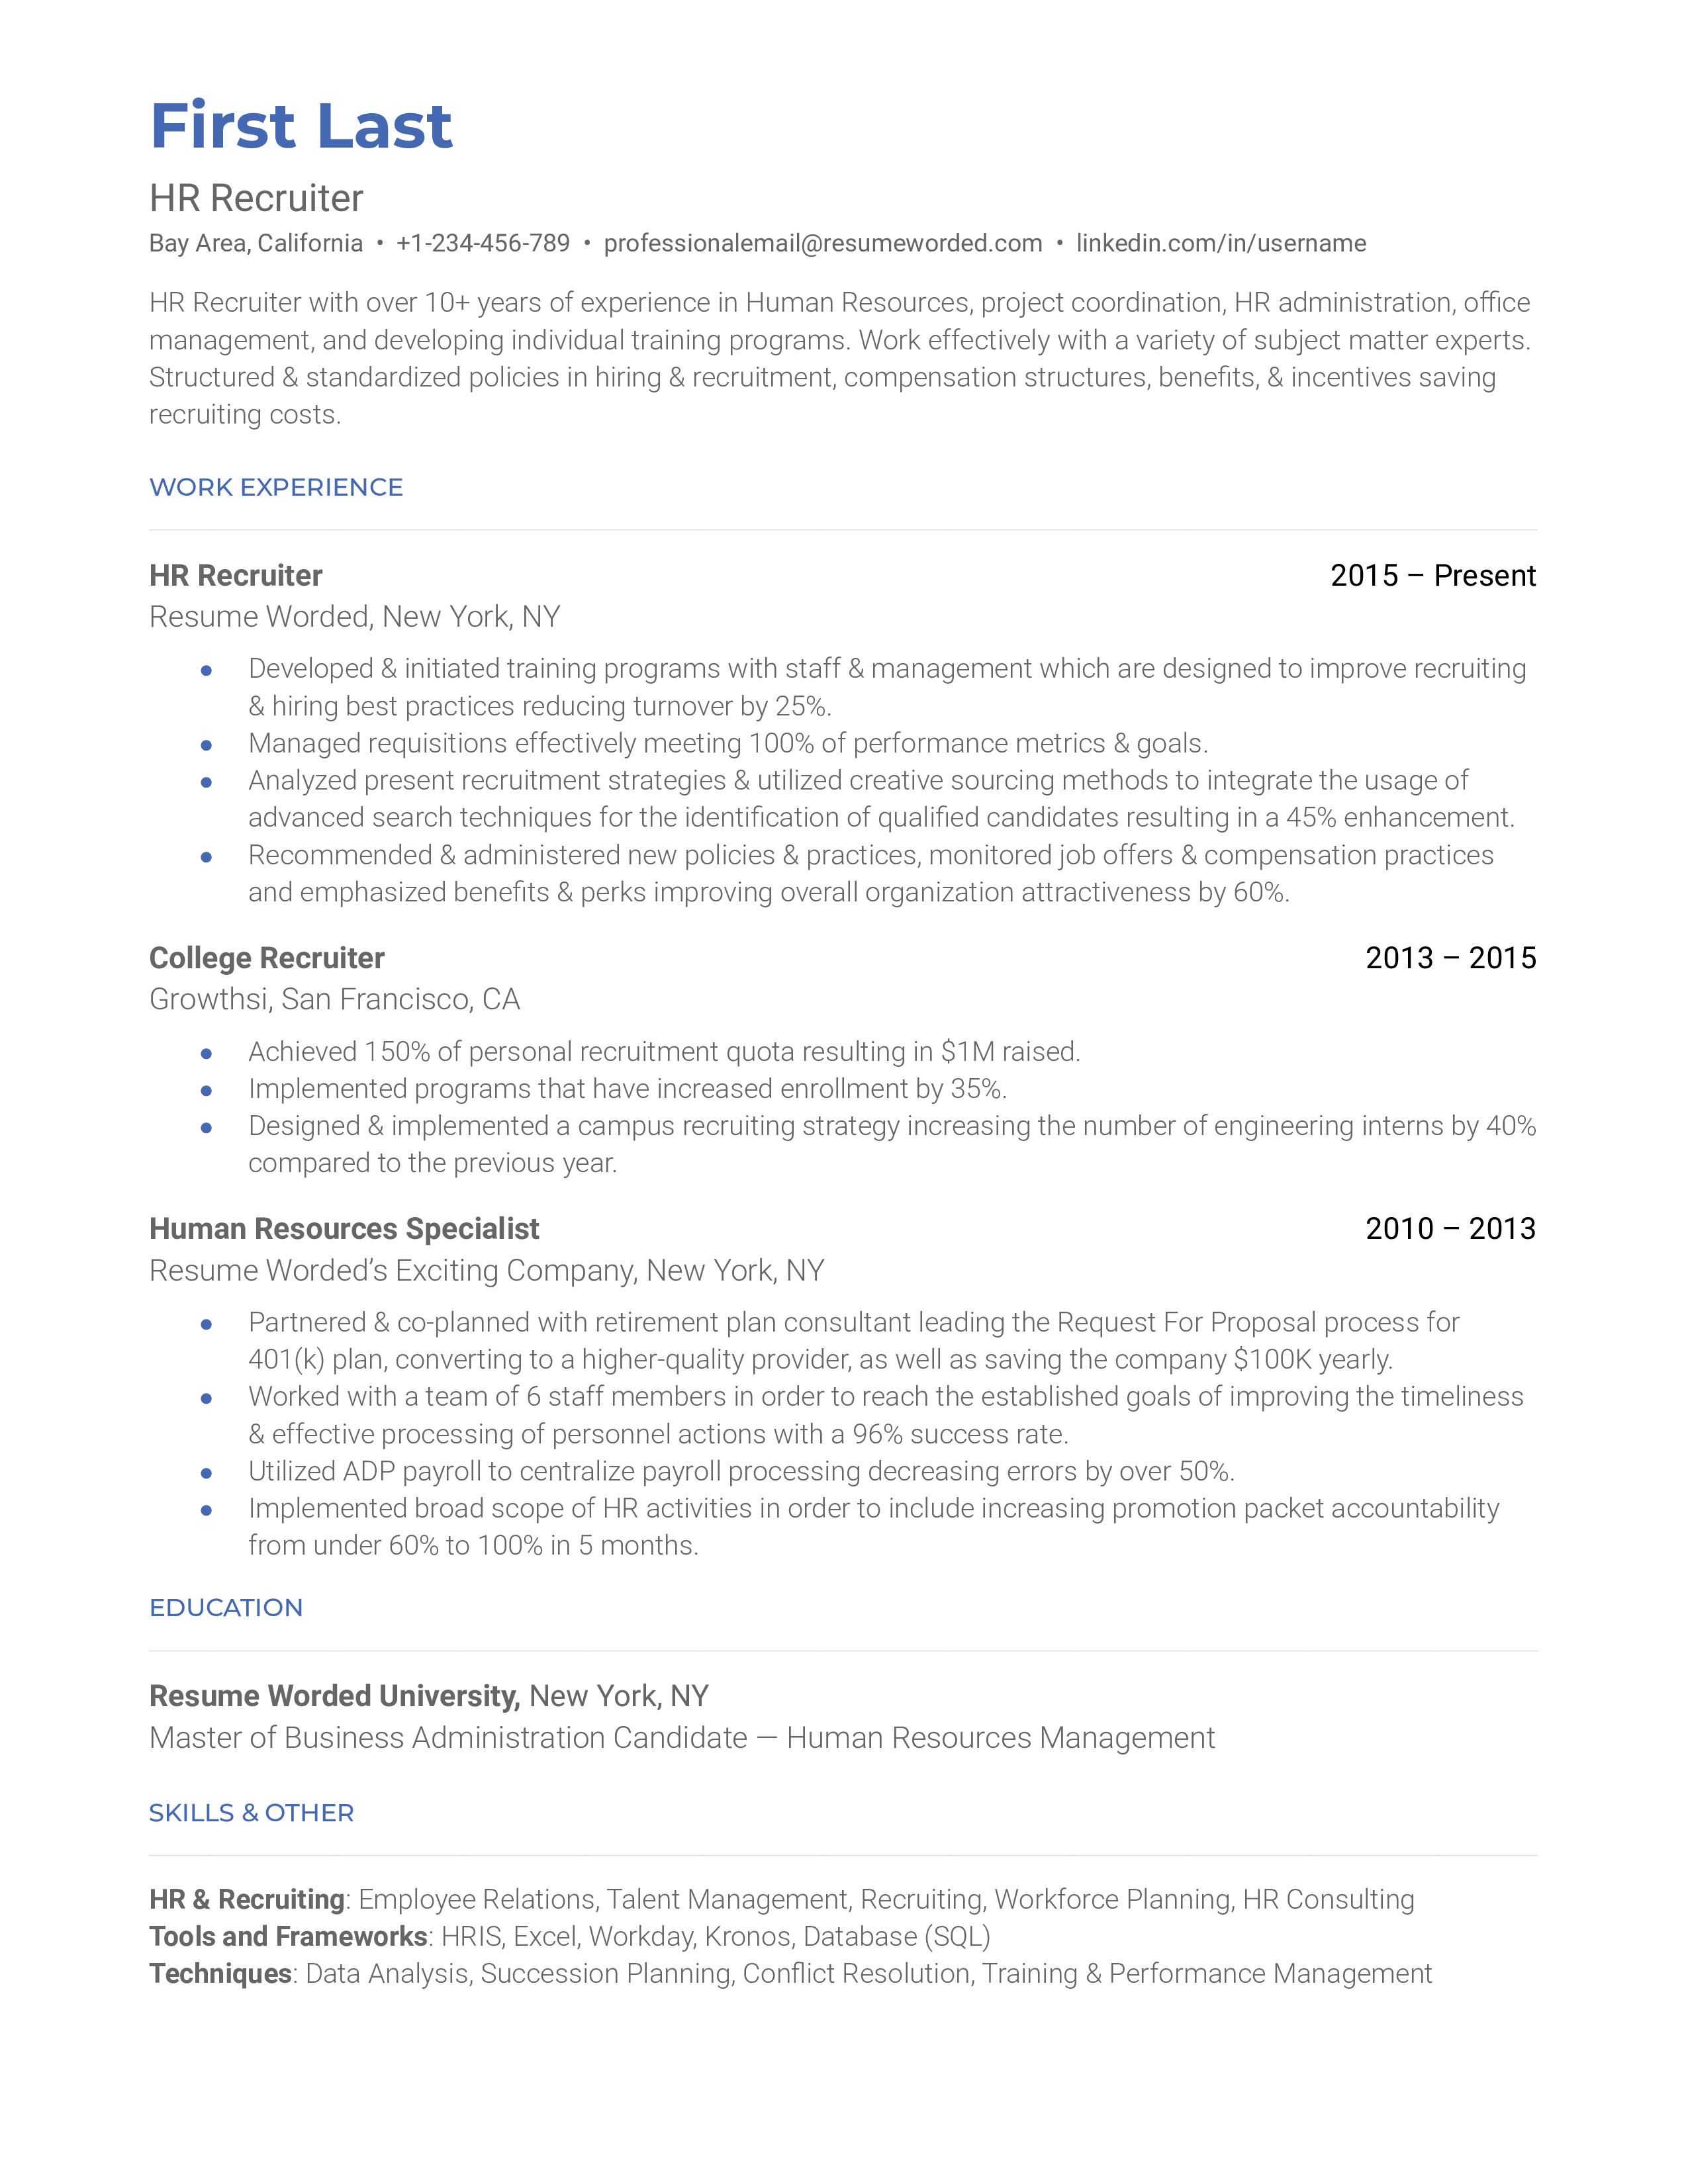 HR Recruiter Resume Template + Example